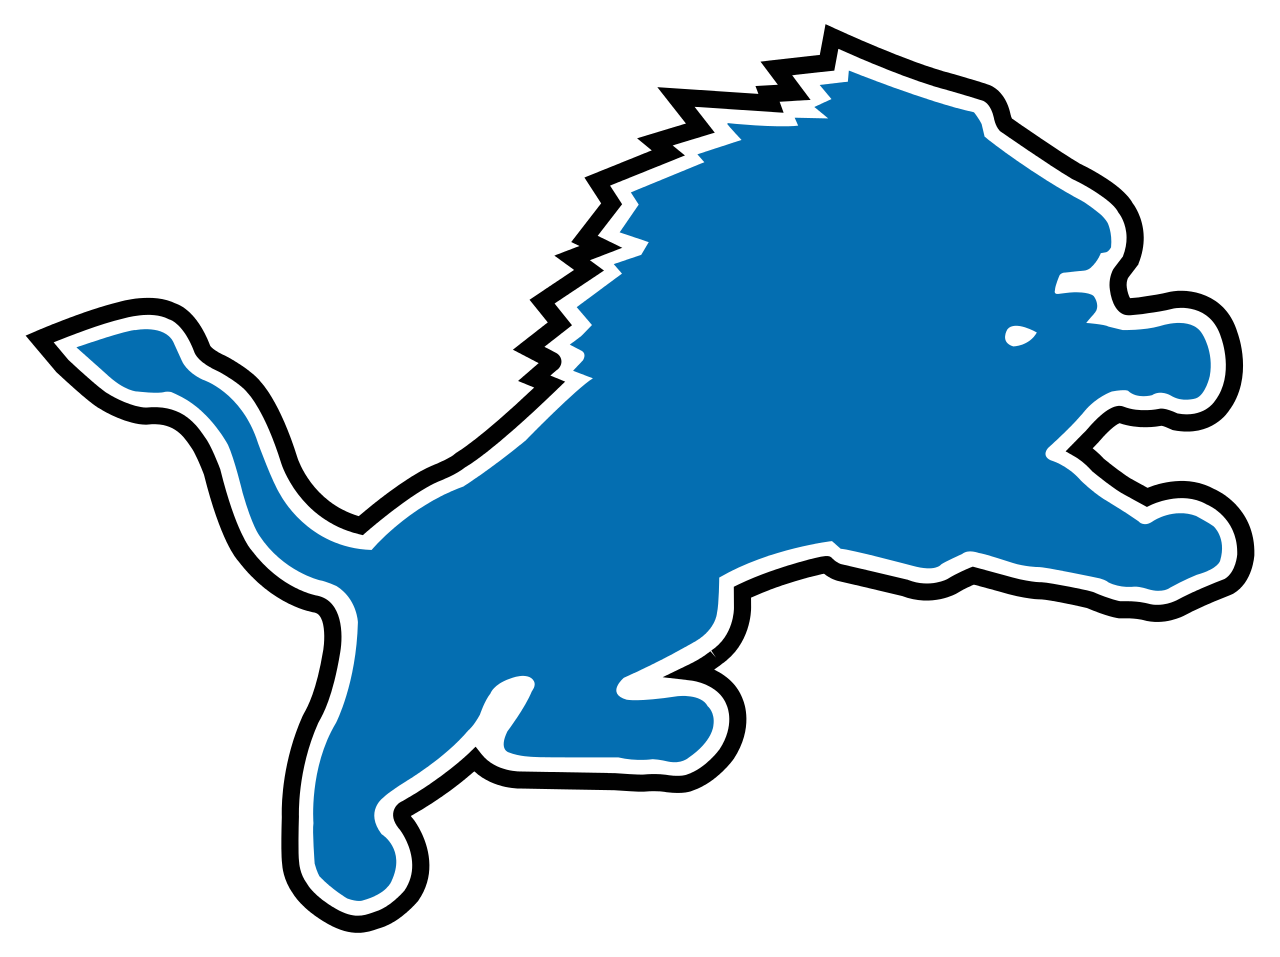 Detroit lions american footba